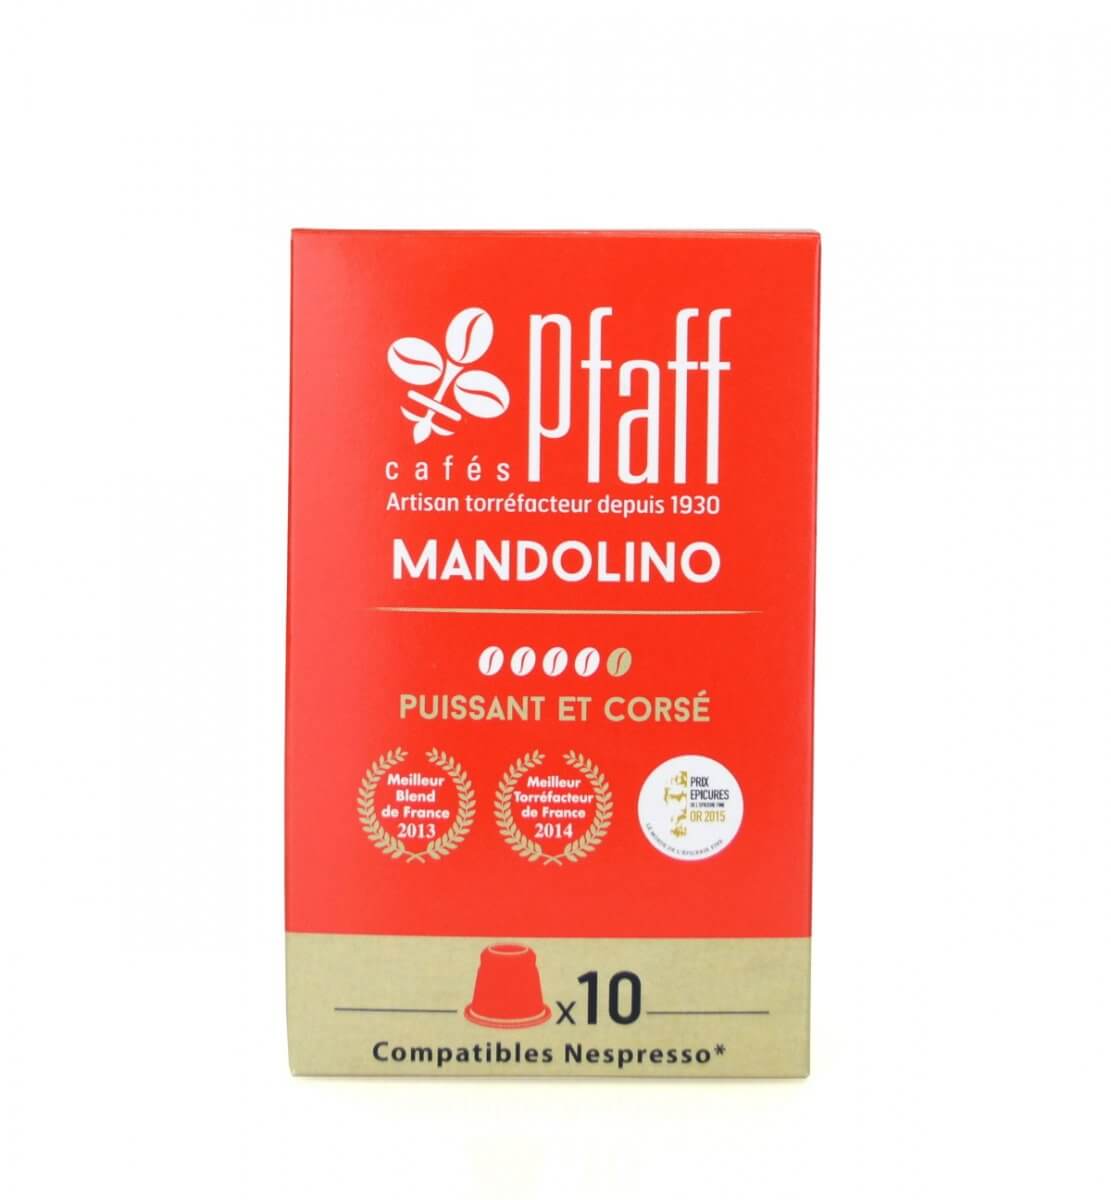 mandolino capsules compatibles nespresso cafes pfaff